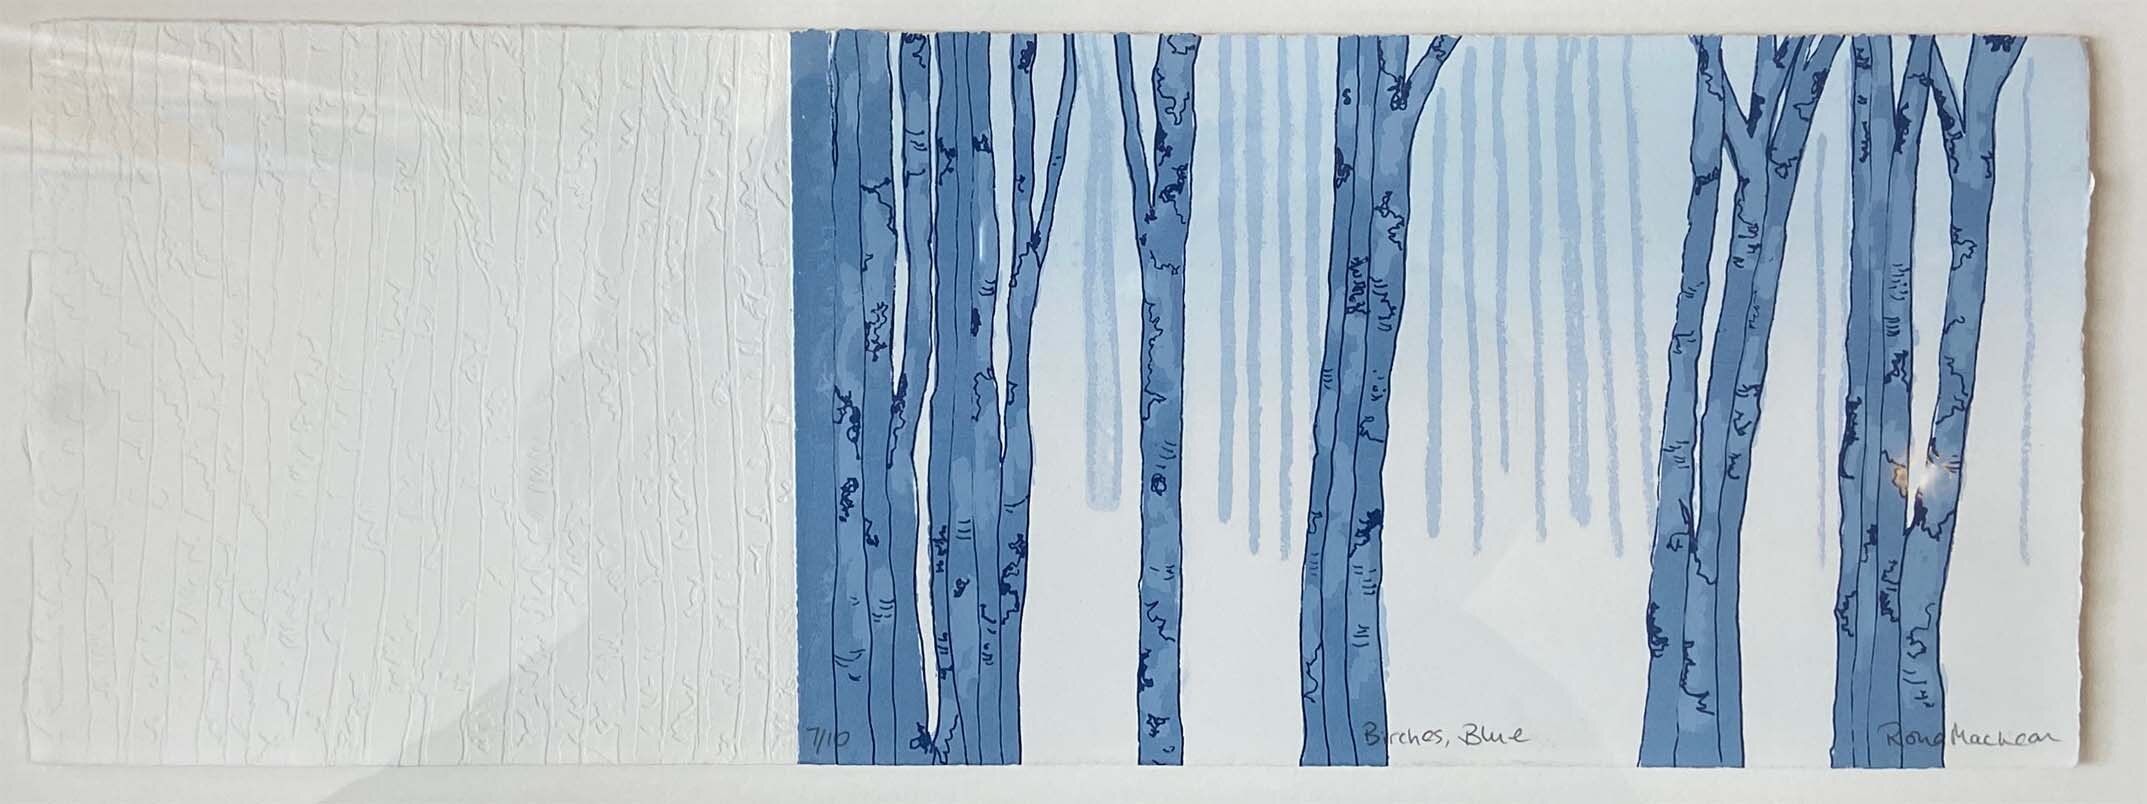 Rona MacLean 'Birches, Blue' Screenprint With Blind Emboss